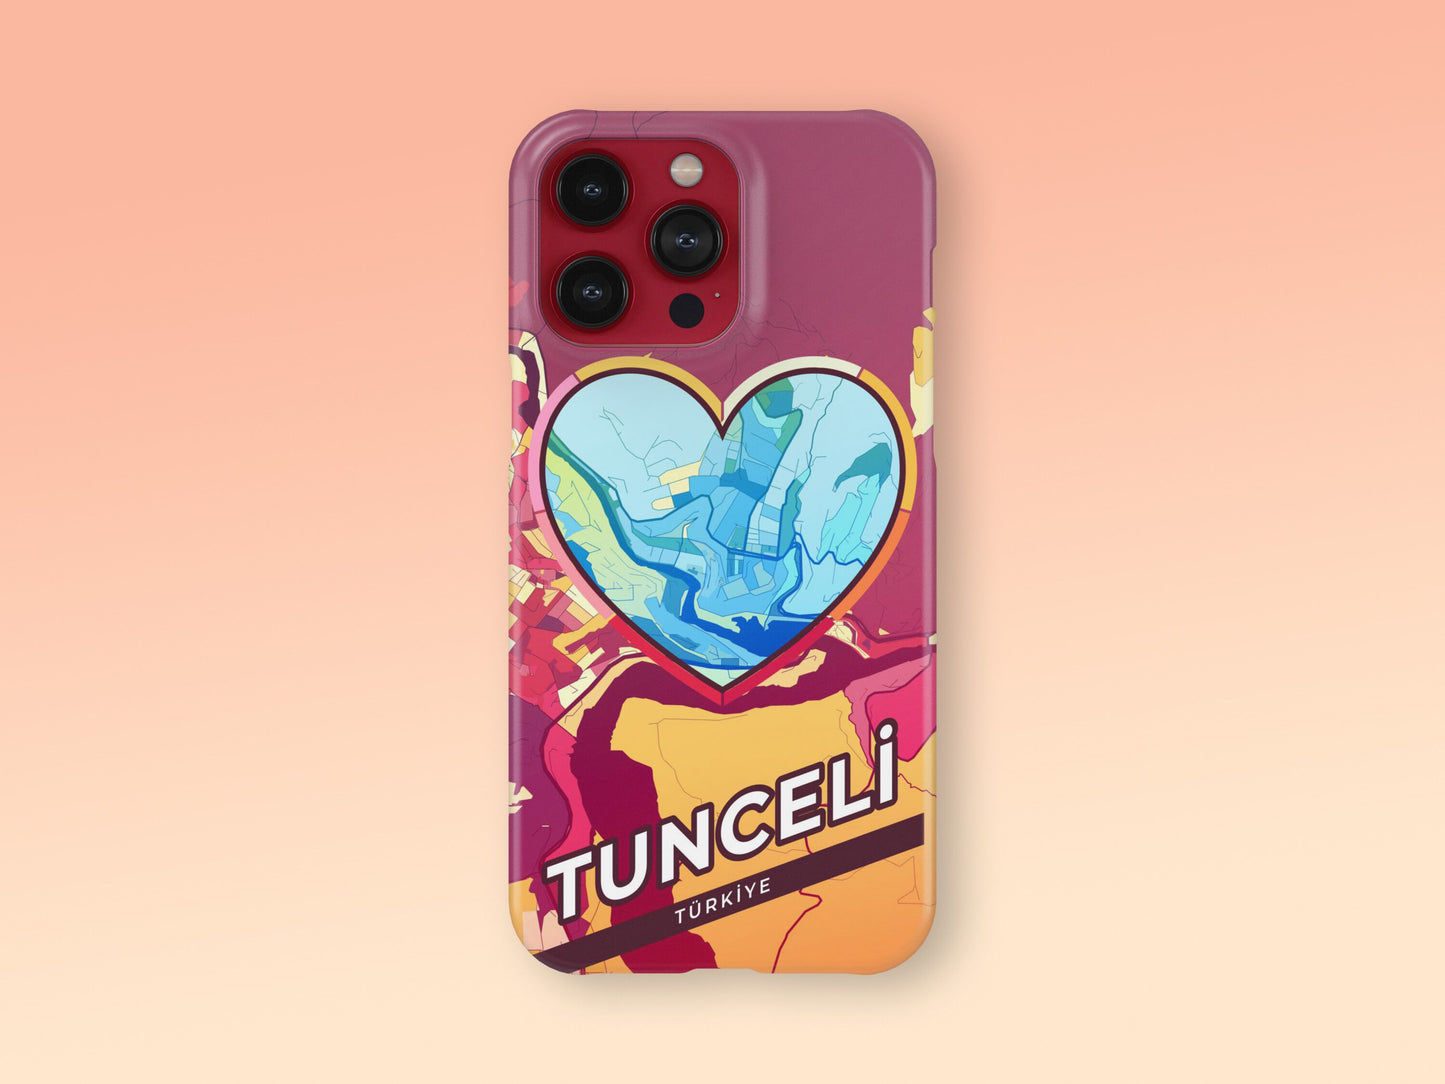 Tunceli Turkey slim phone case with colorful icon 2